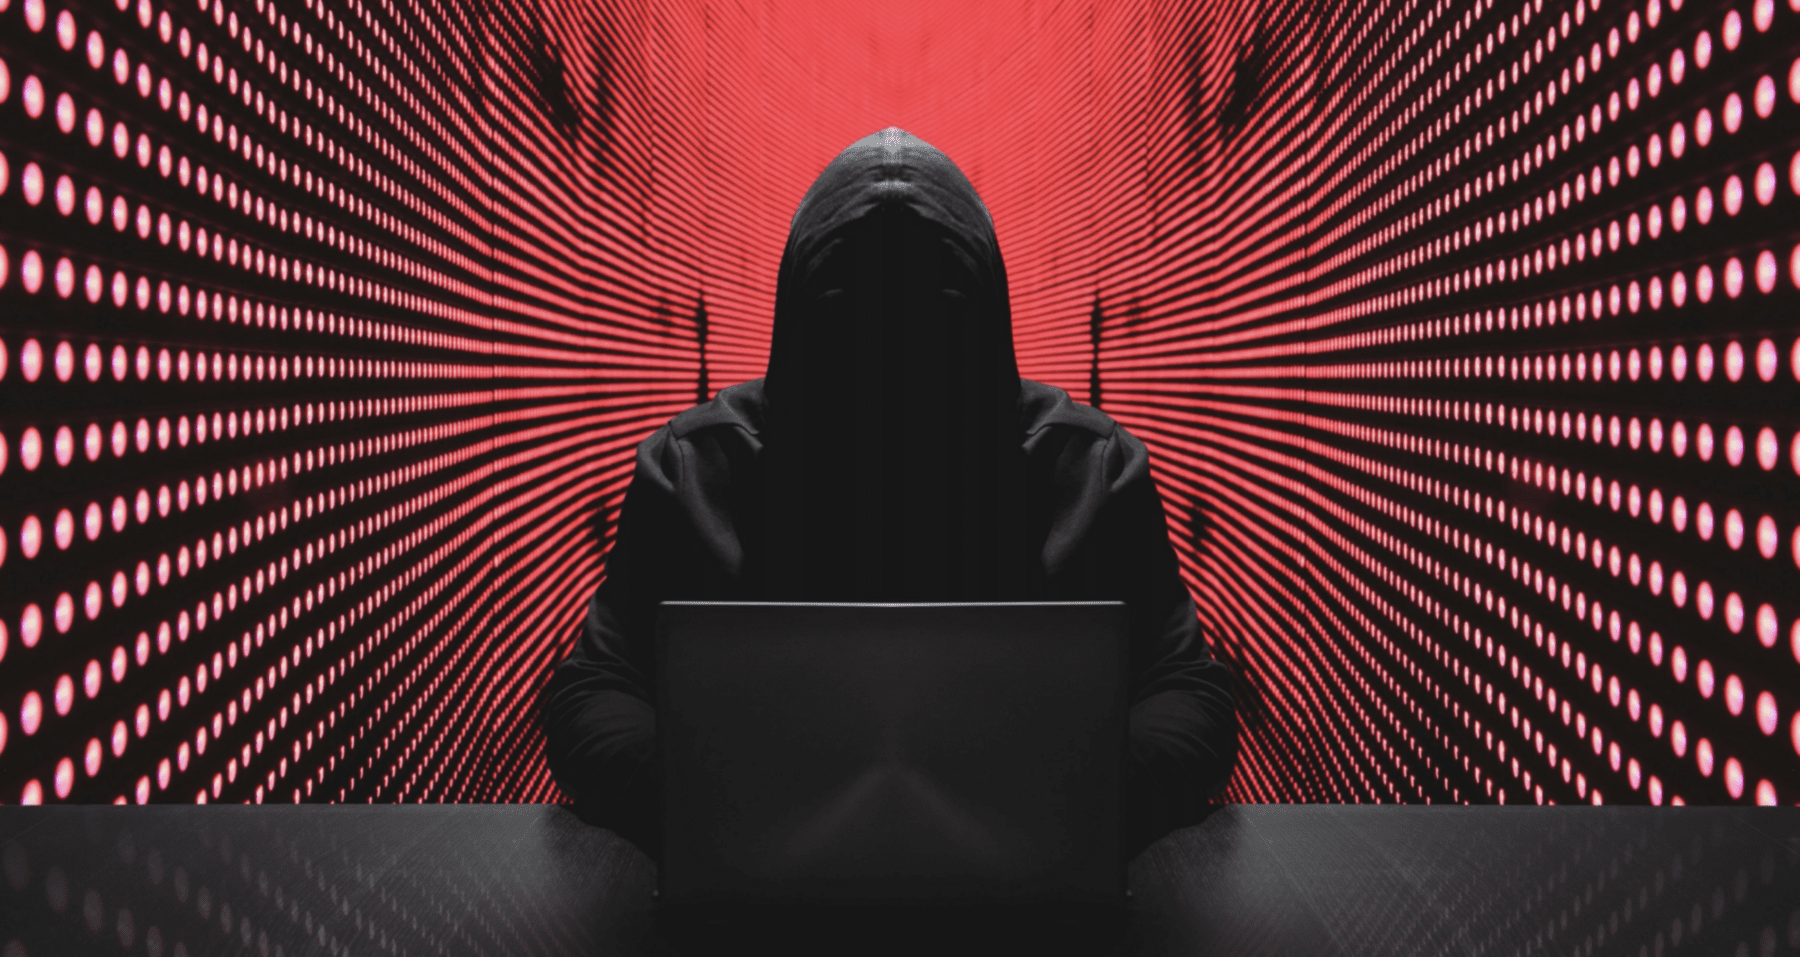 Cybersecurity threats in an uncertain world